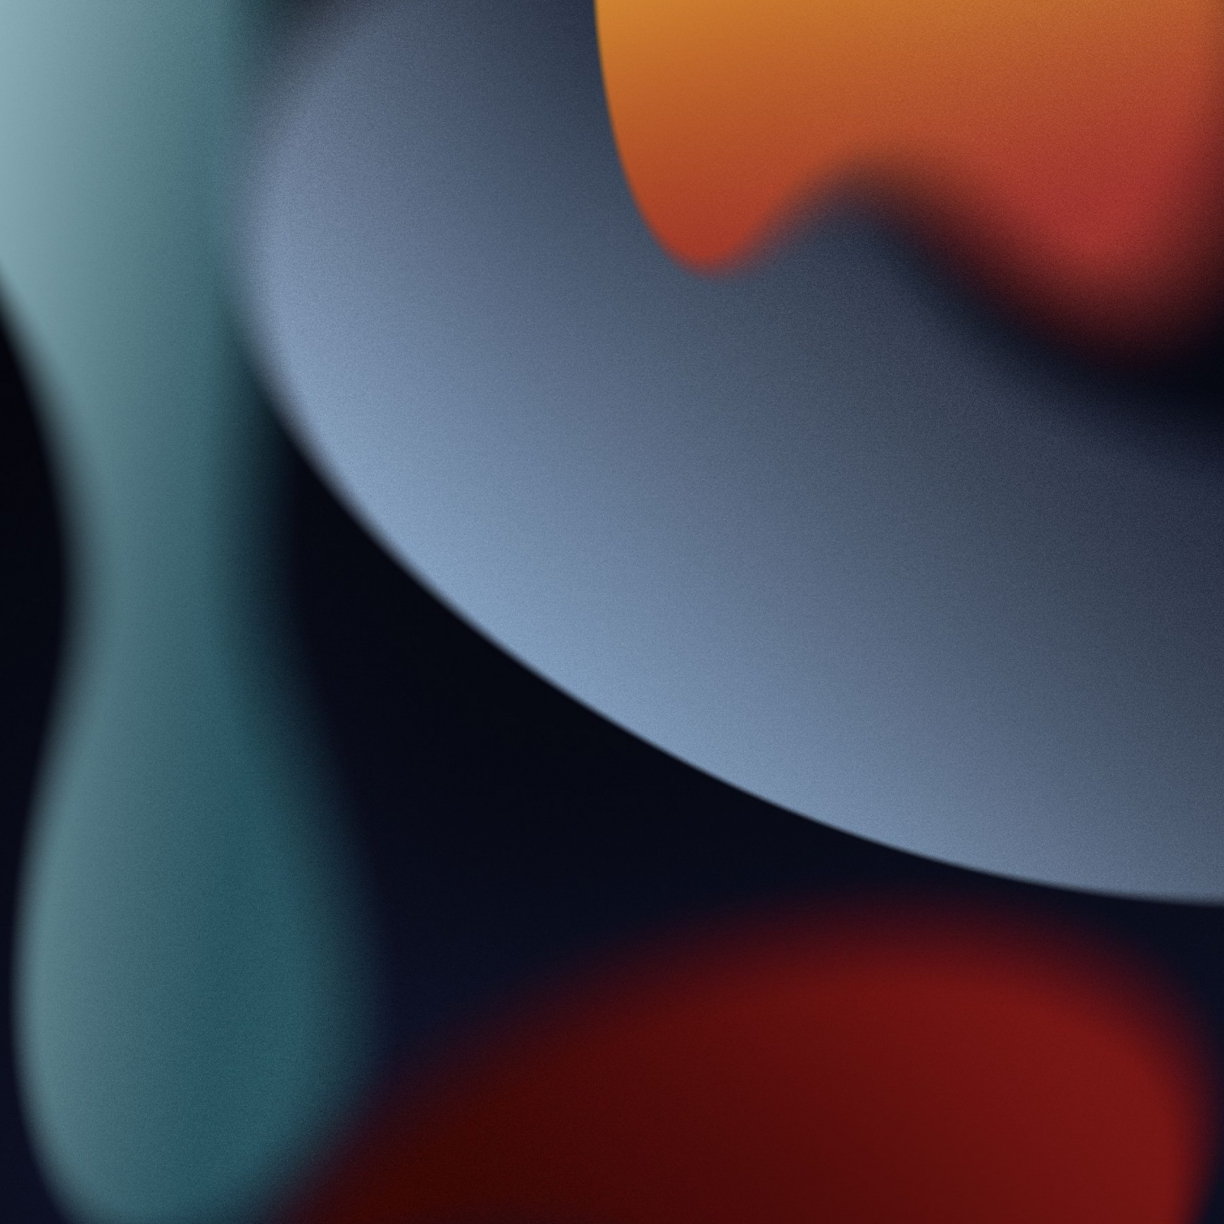 Wallpaper ios 15, blur shapes, abstraction desktop wallpaper, hd image ...